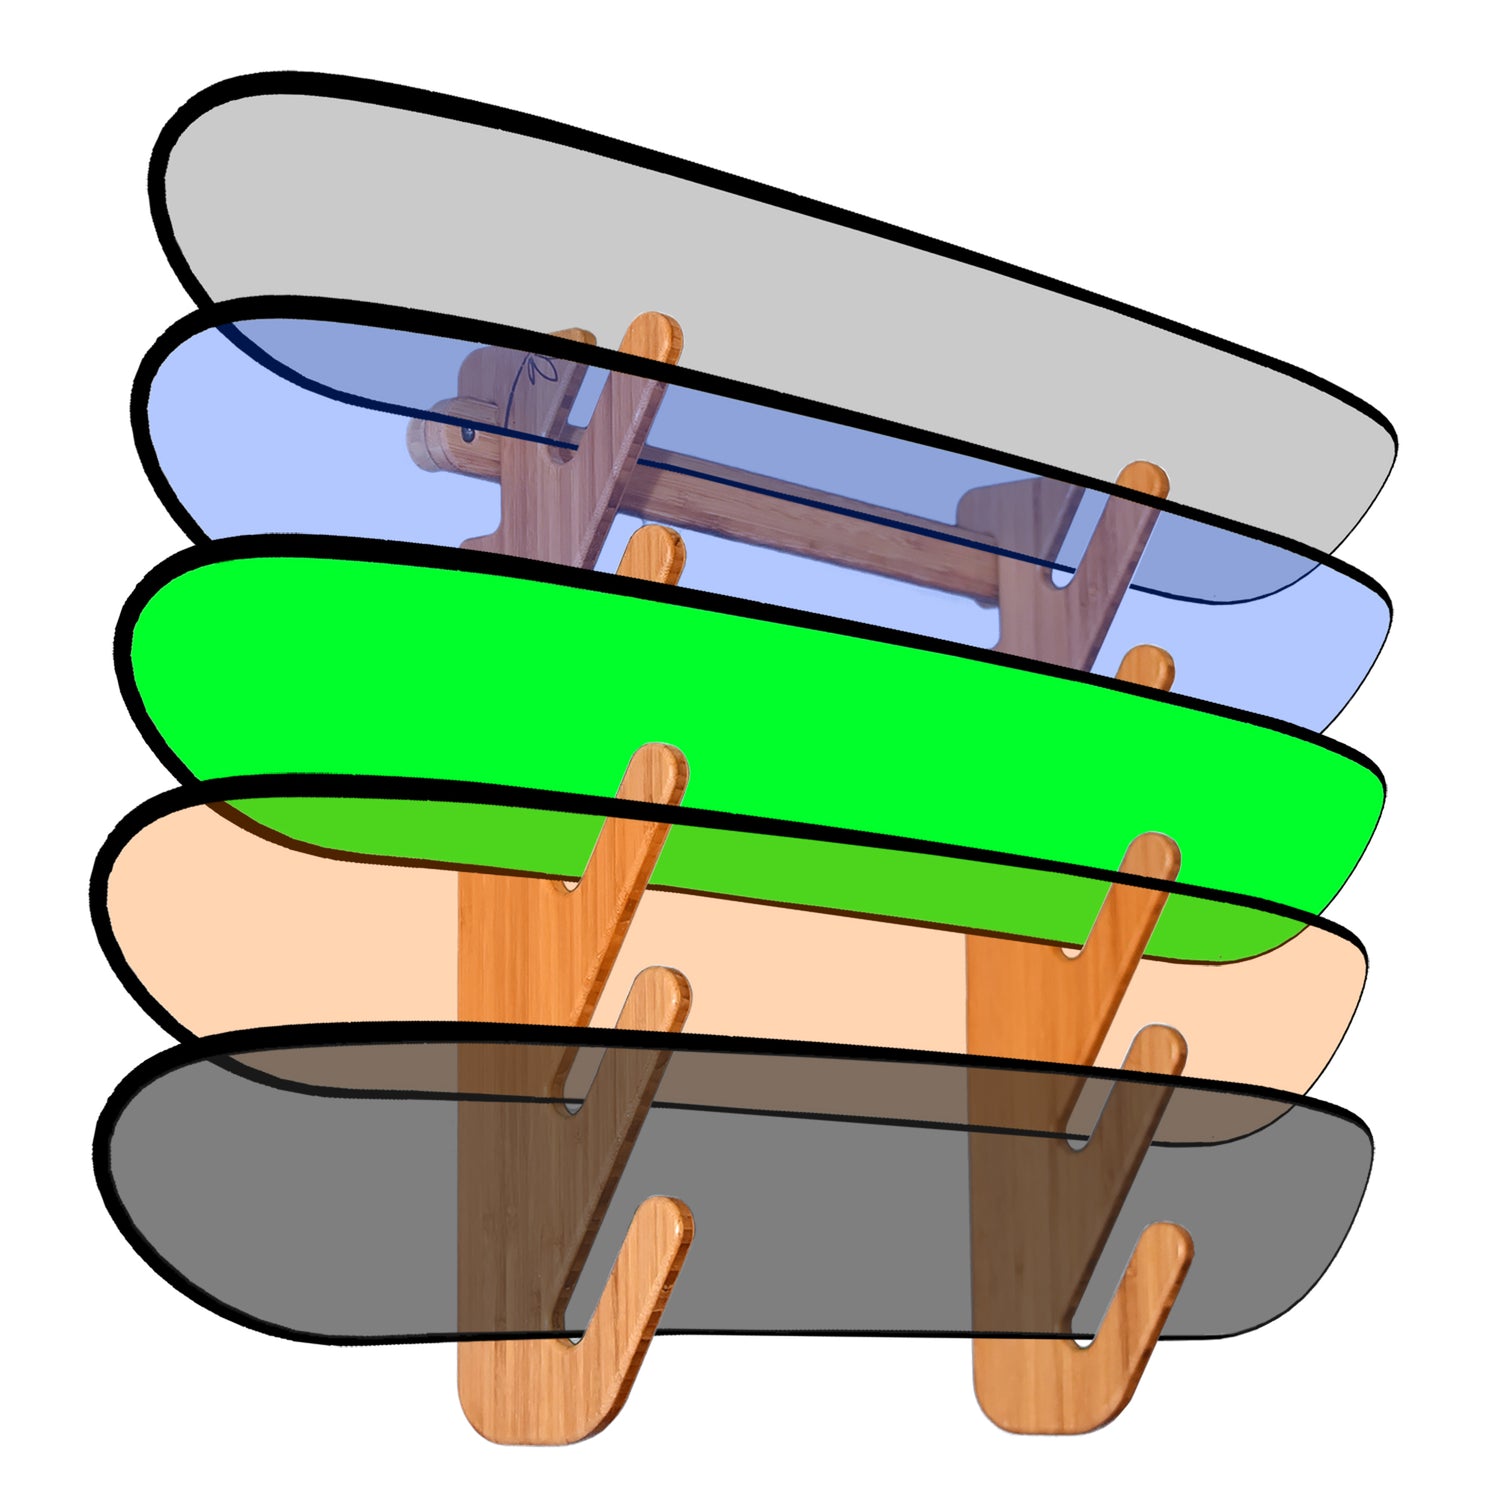 Skateboard Rack - Skate Deck Rack